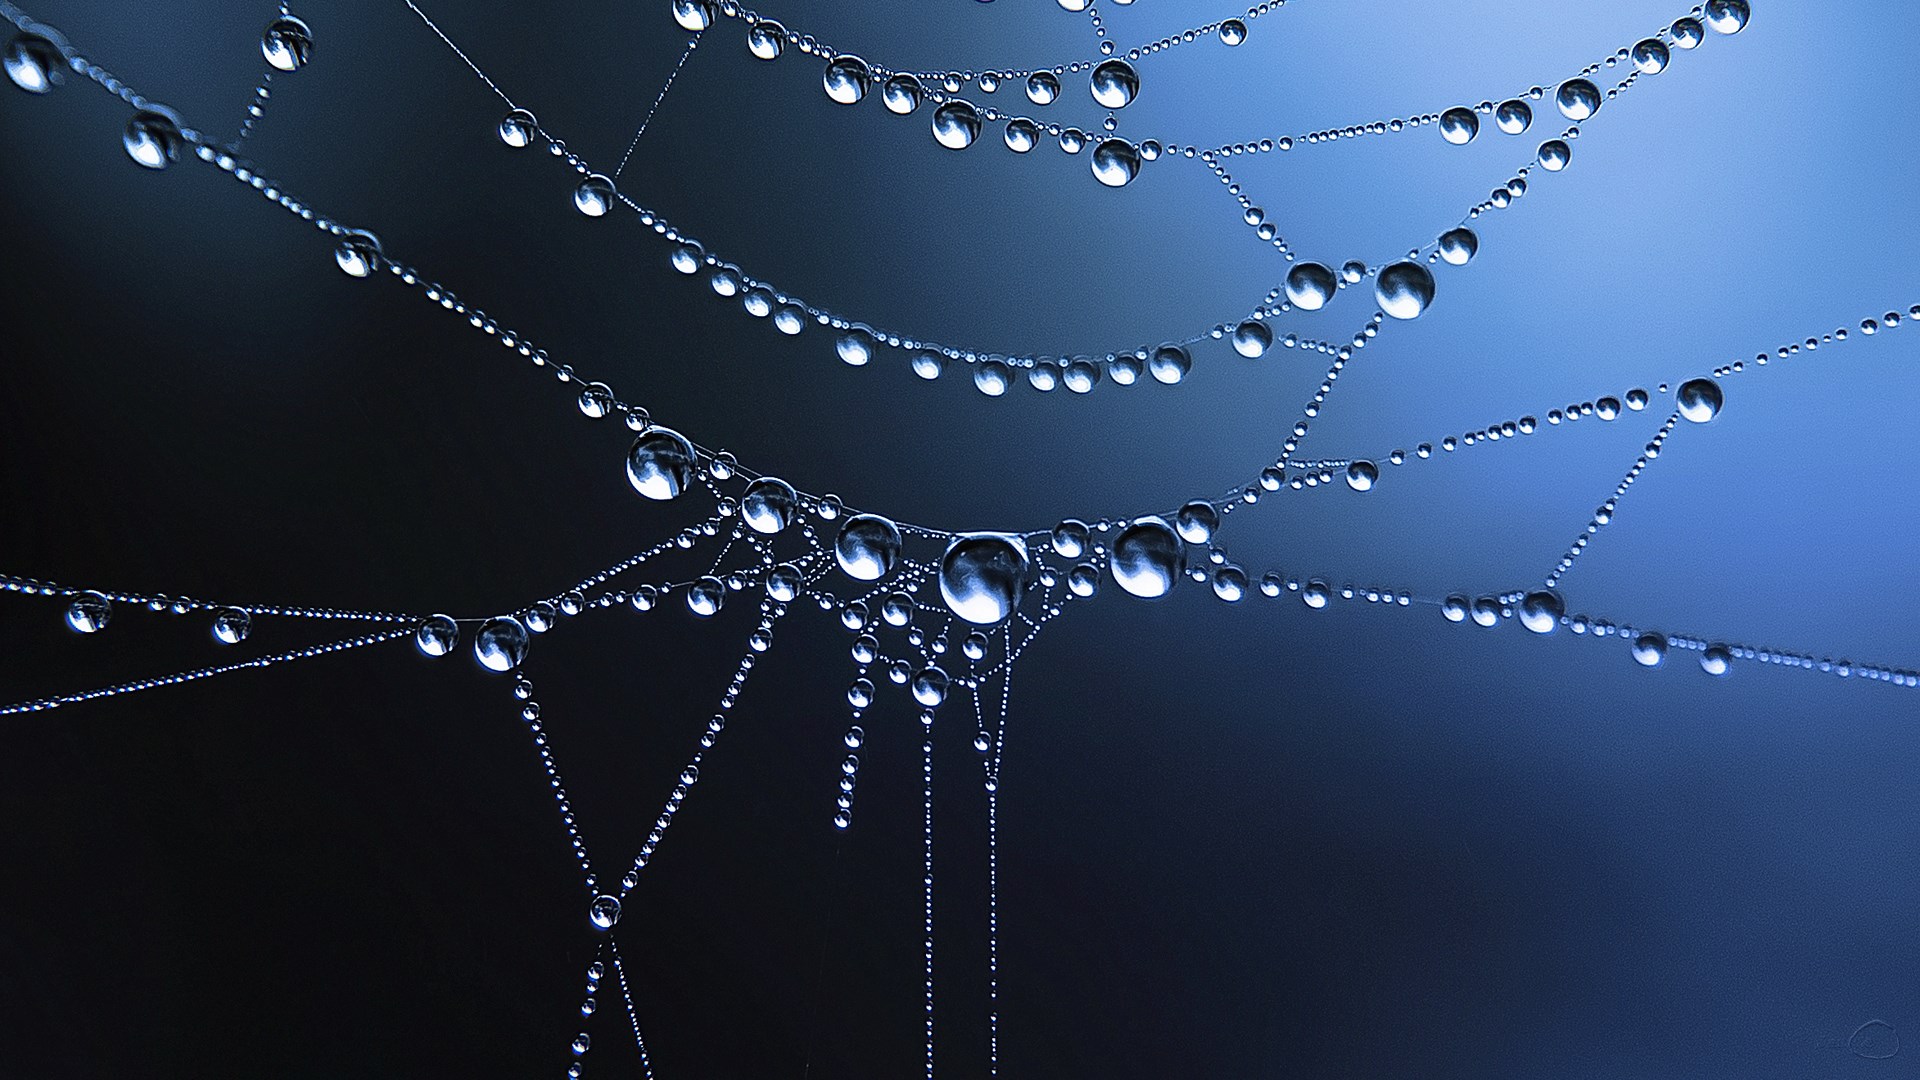 Spiderweb Cobweb Dew Drops Wallpaper [1920x1080]